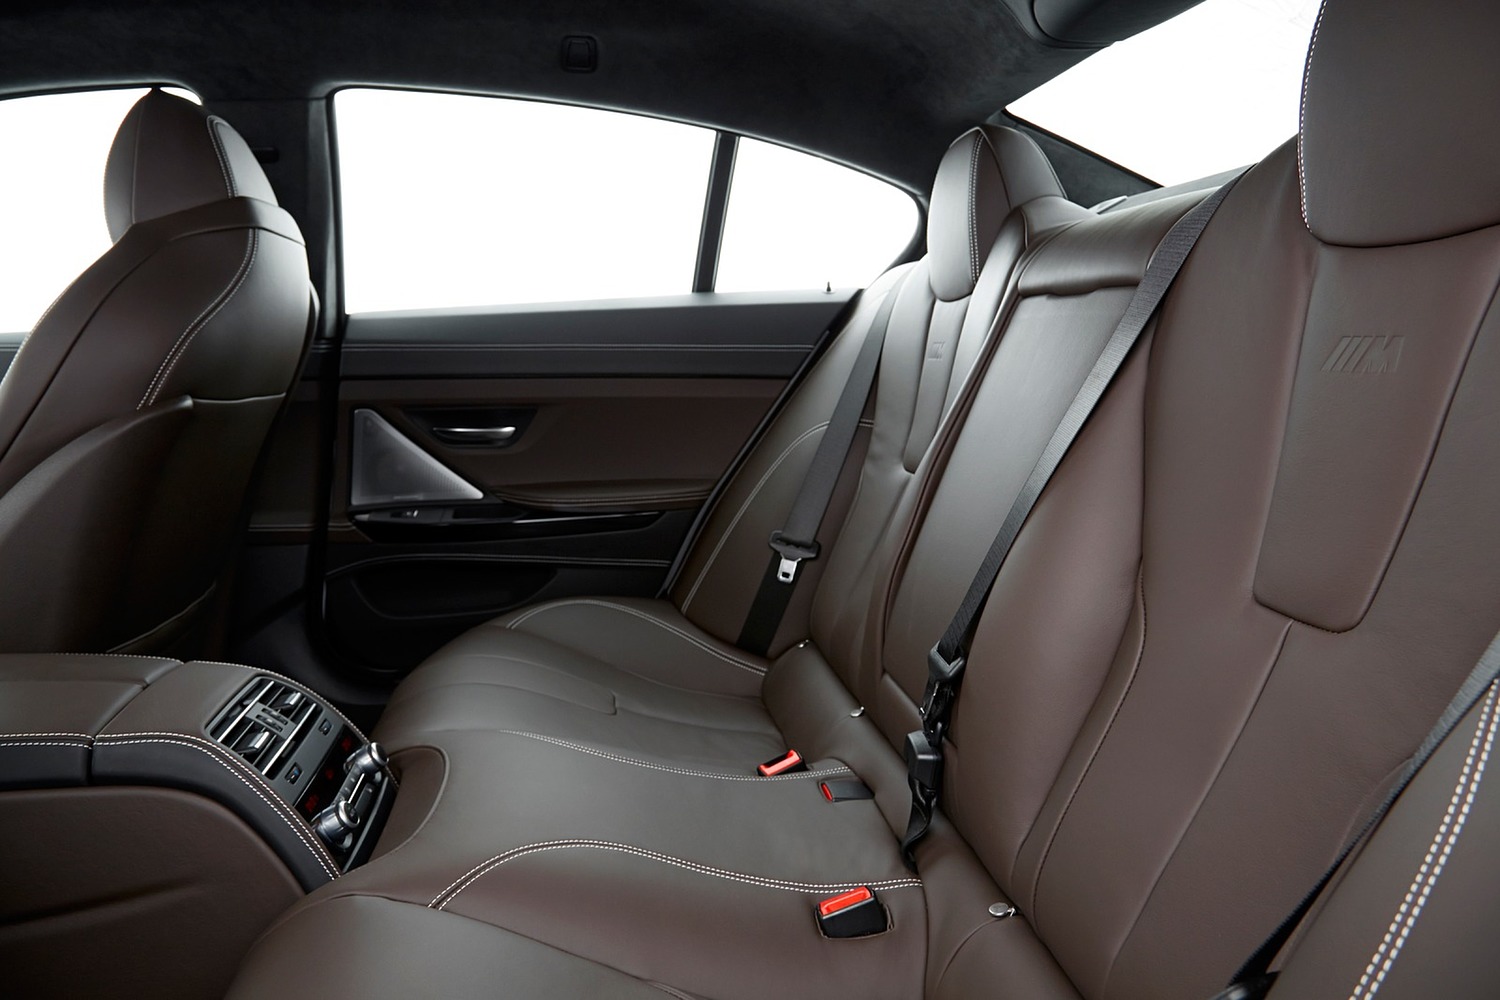 BMW M6 Gran Coupe Sedan Rear Interior (2017 model year shown)